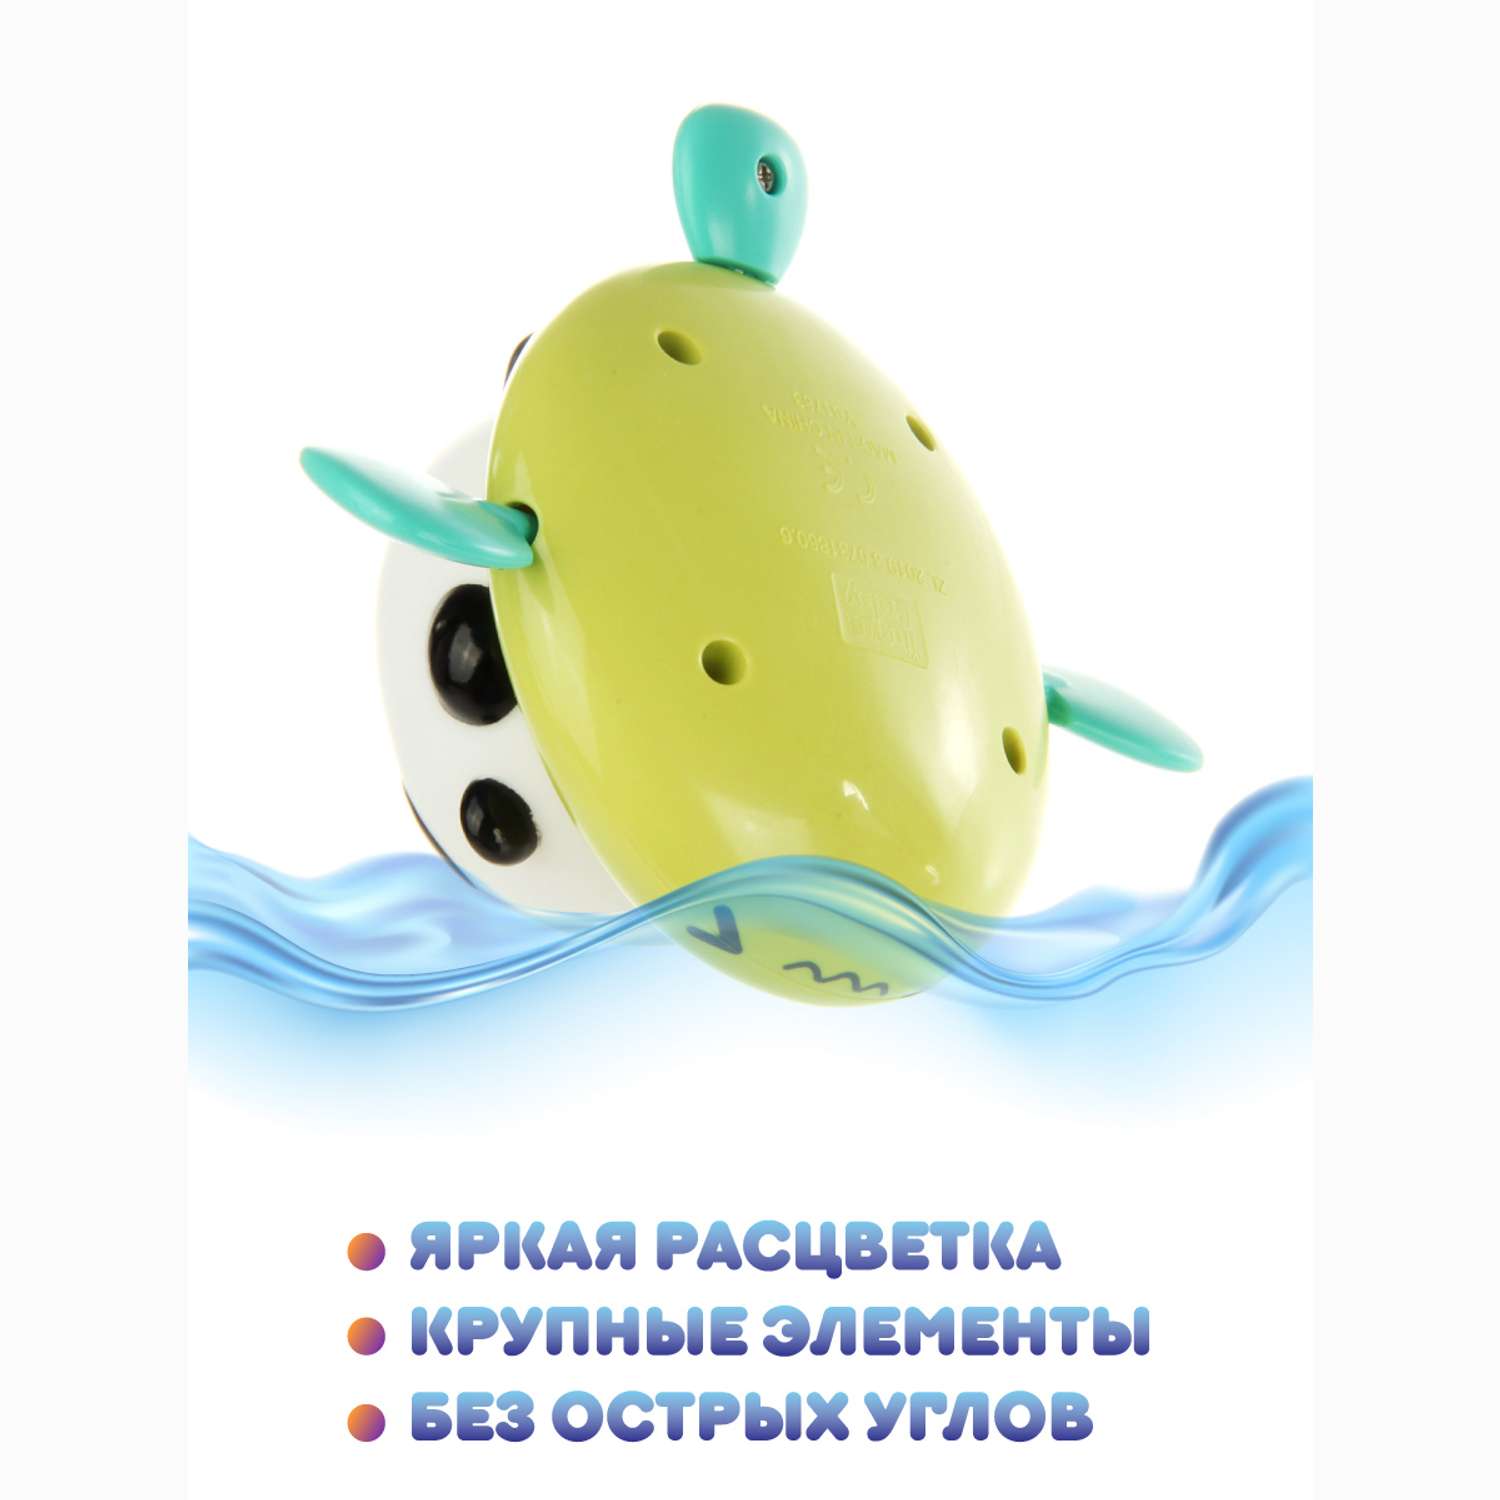 Игрушка для купания Ути Пути Панда на зелёной подушке - фото 6